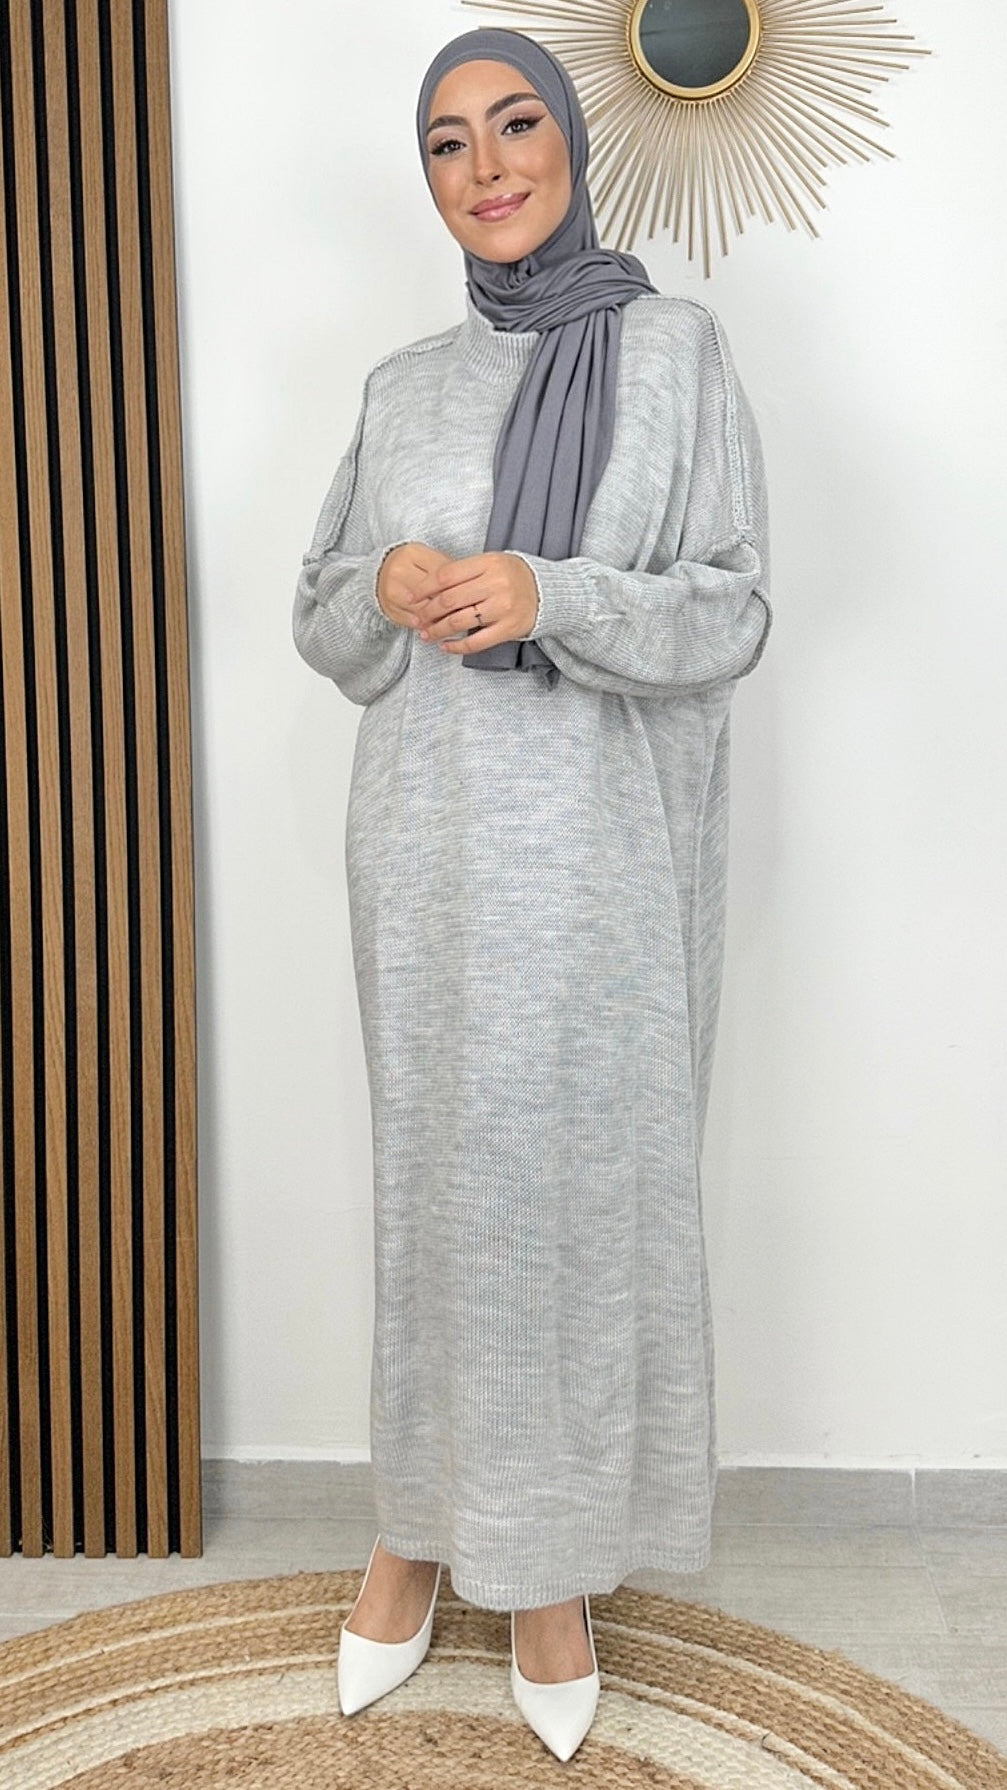 Maglione Sewing- hijab paradise - maglione lungo - hijab - modest dress - cucitura in fuori - donna musulmana 